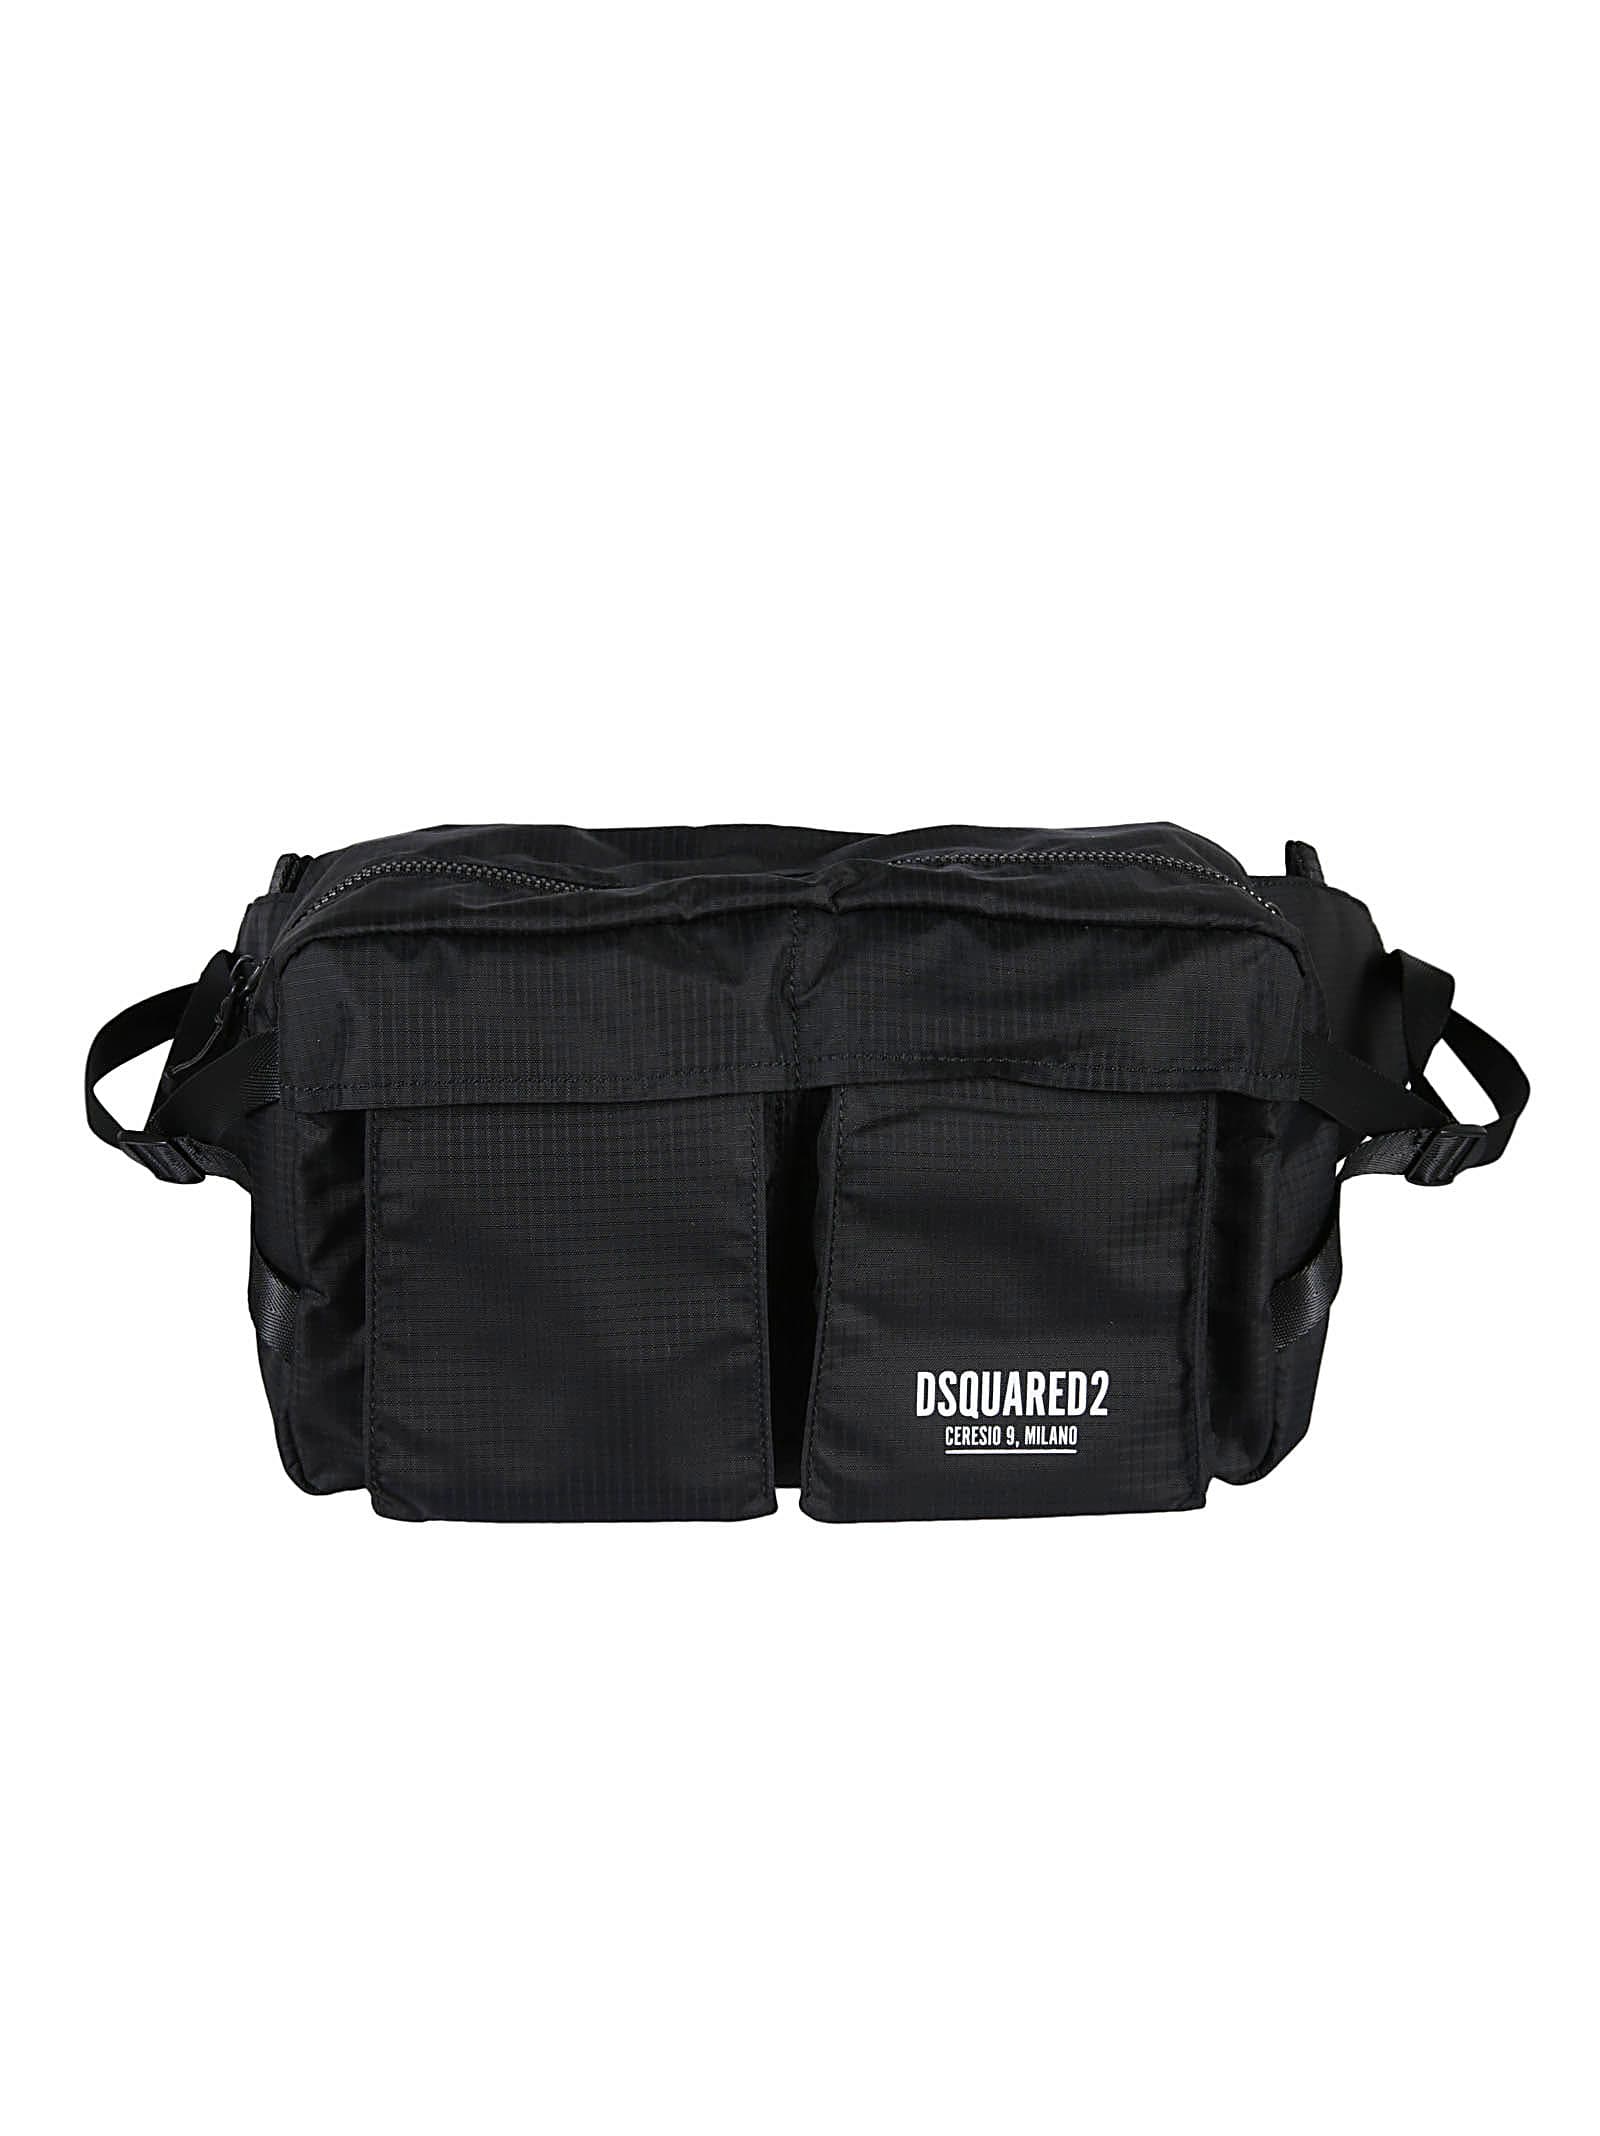 Dsquared2 Ceresio 9 Belt Bag In Black | ModeSens